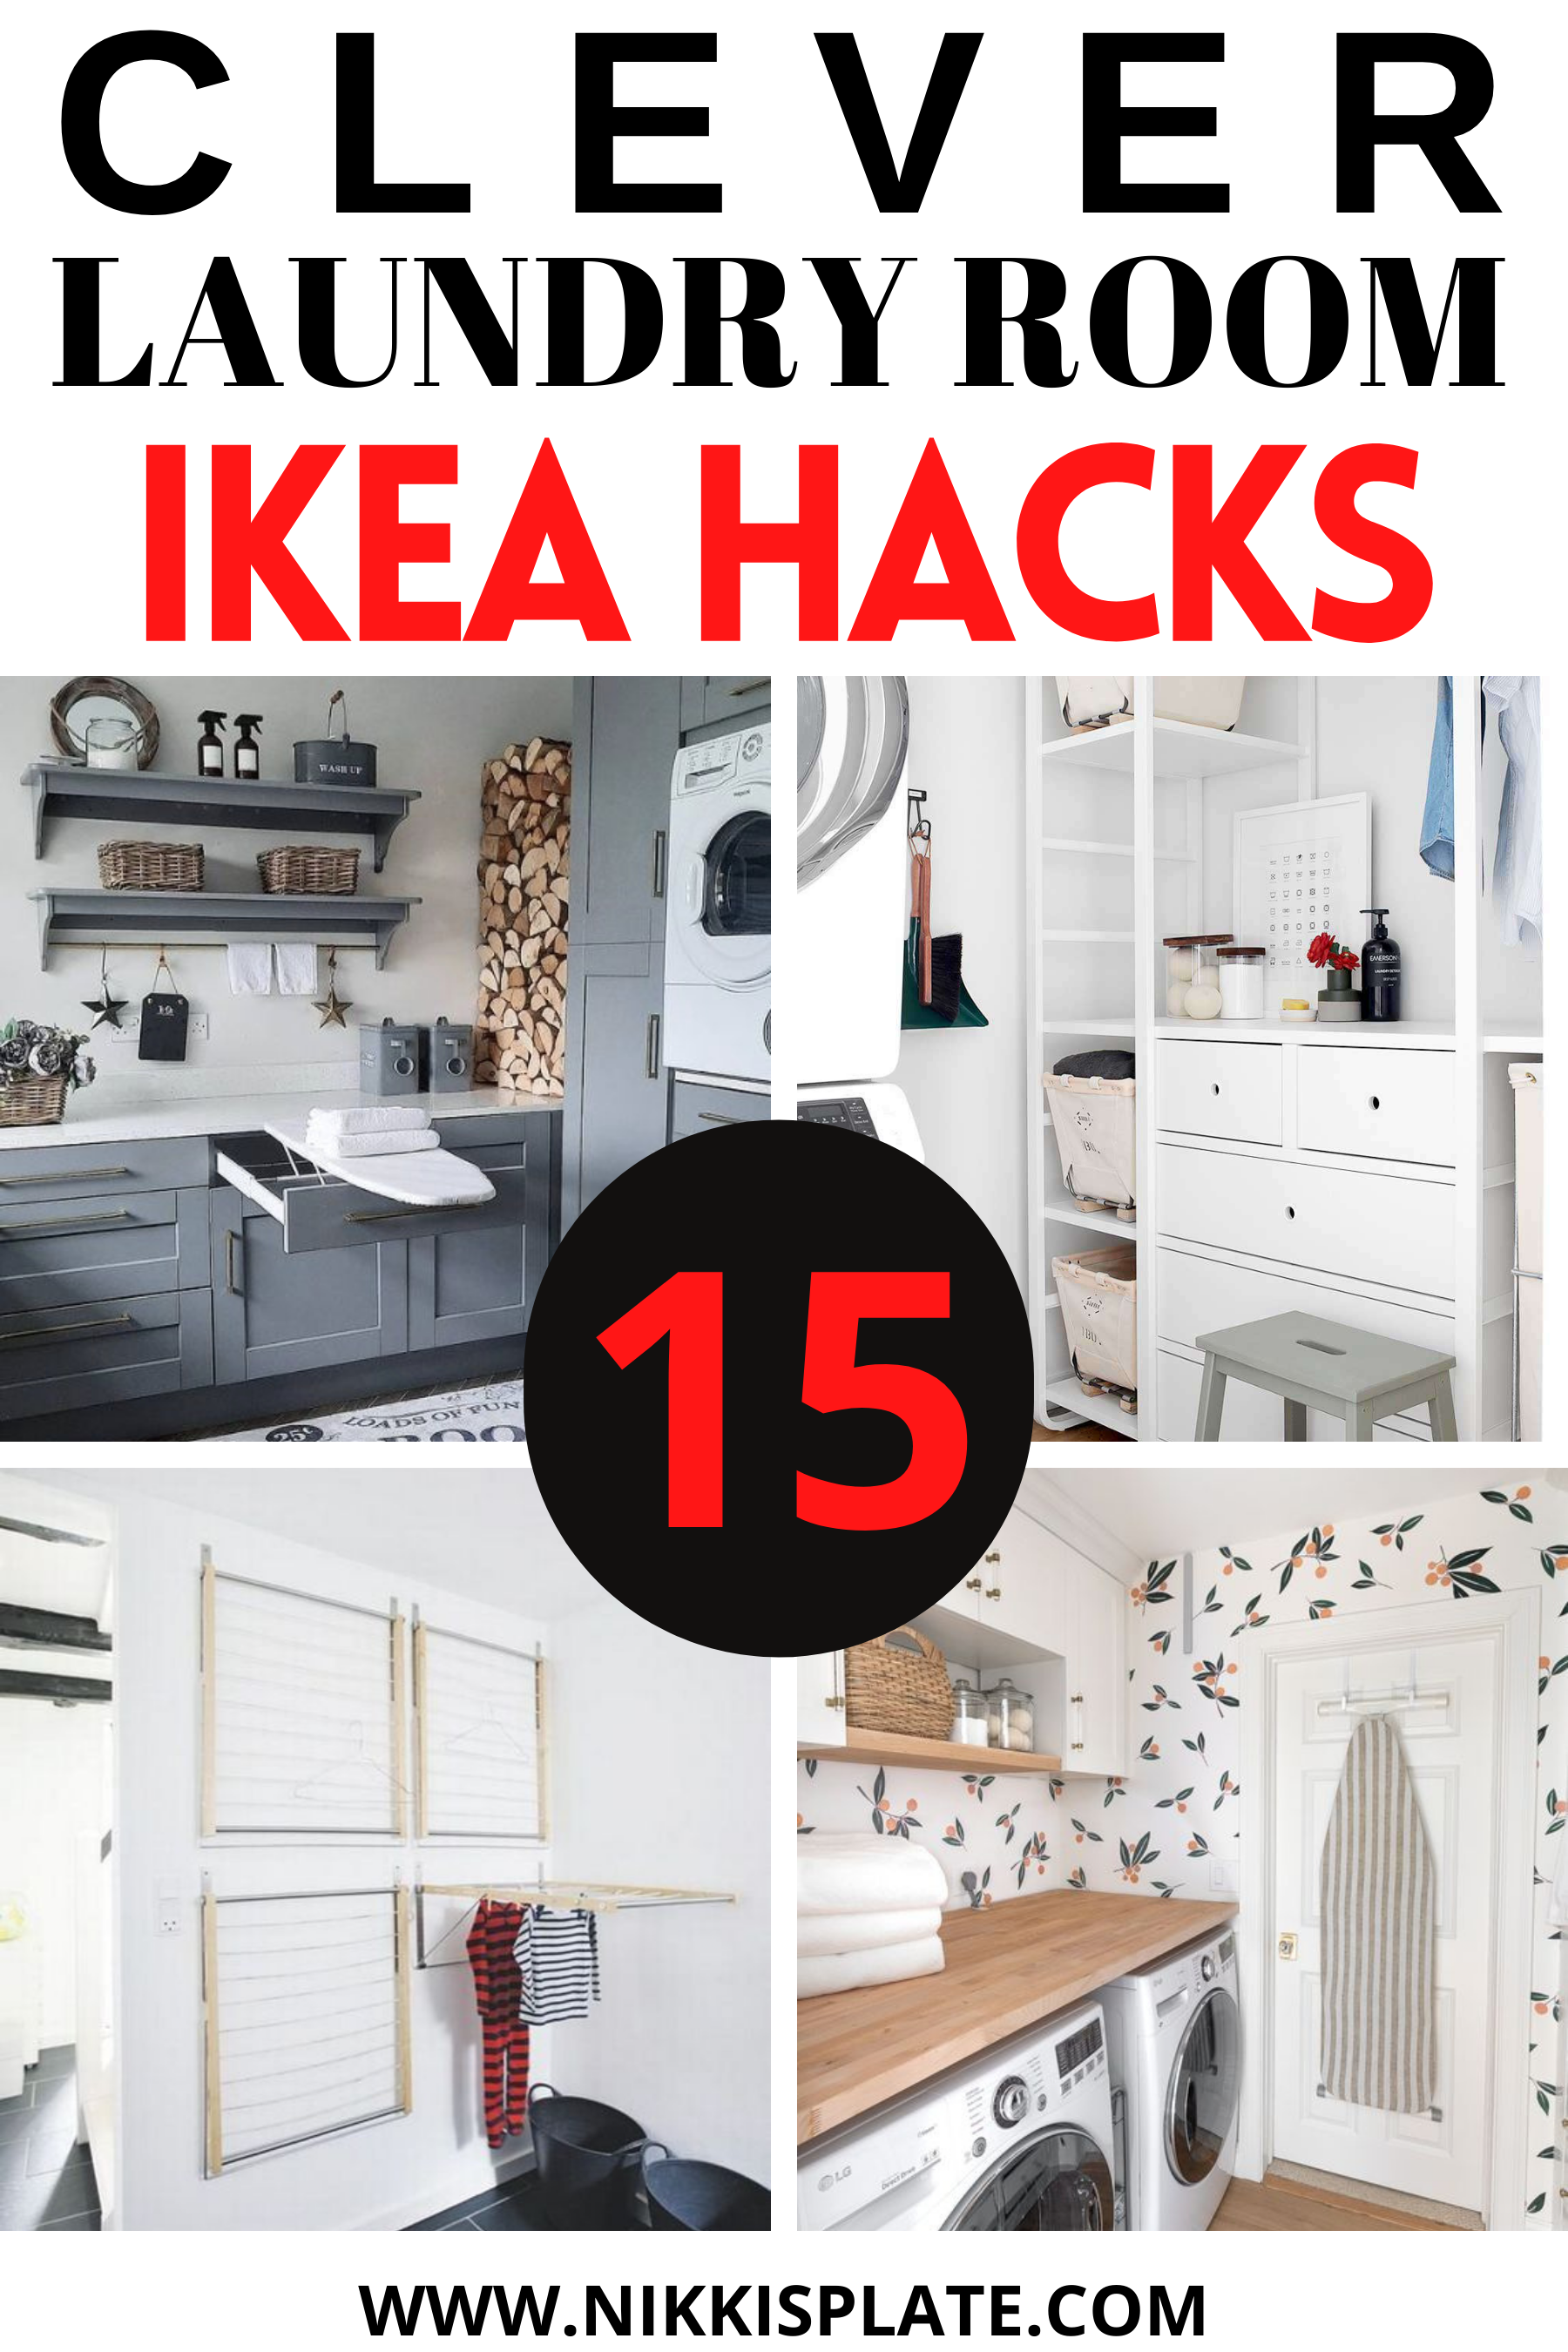 10 Ingenious IKEA Hacks For the Kitchen